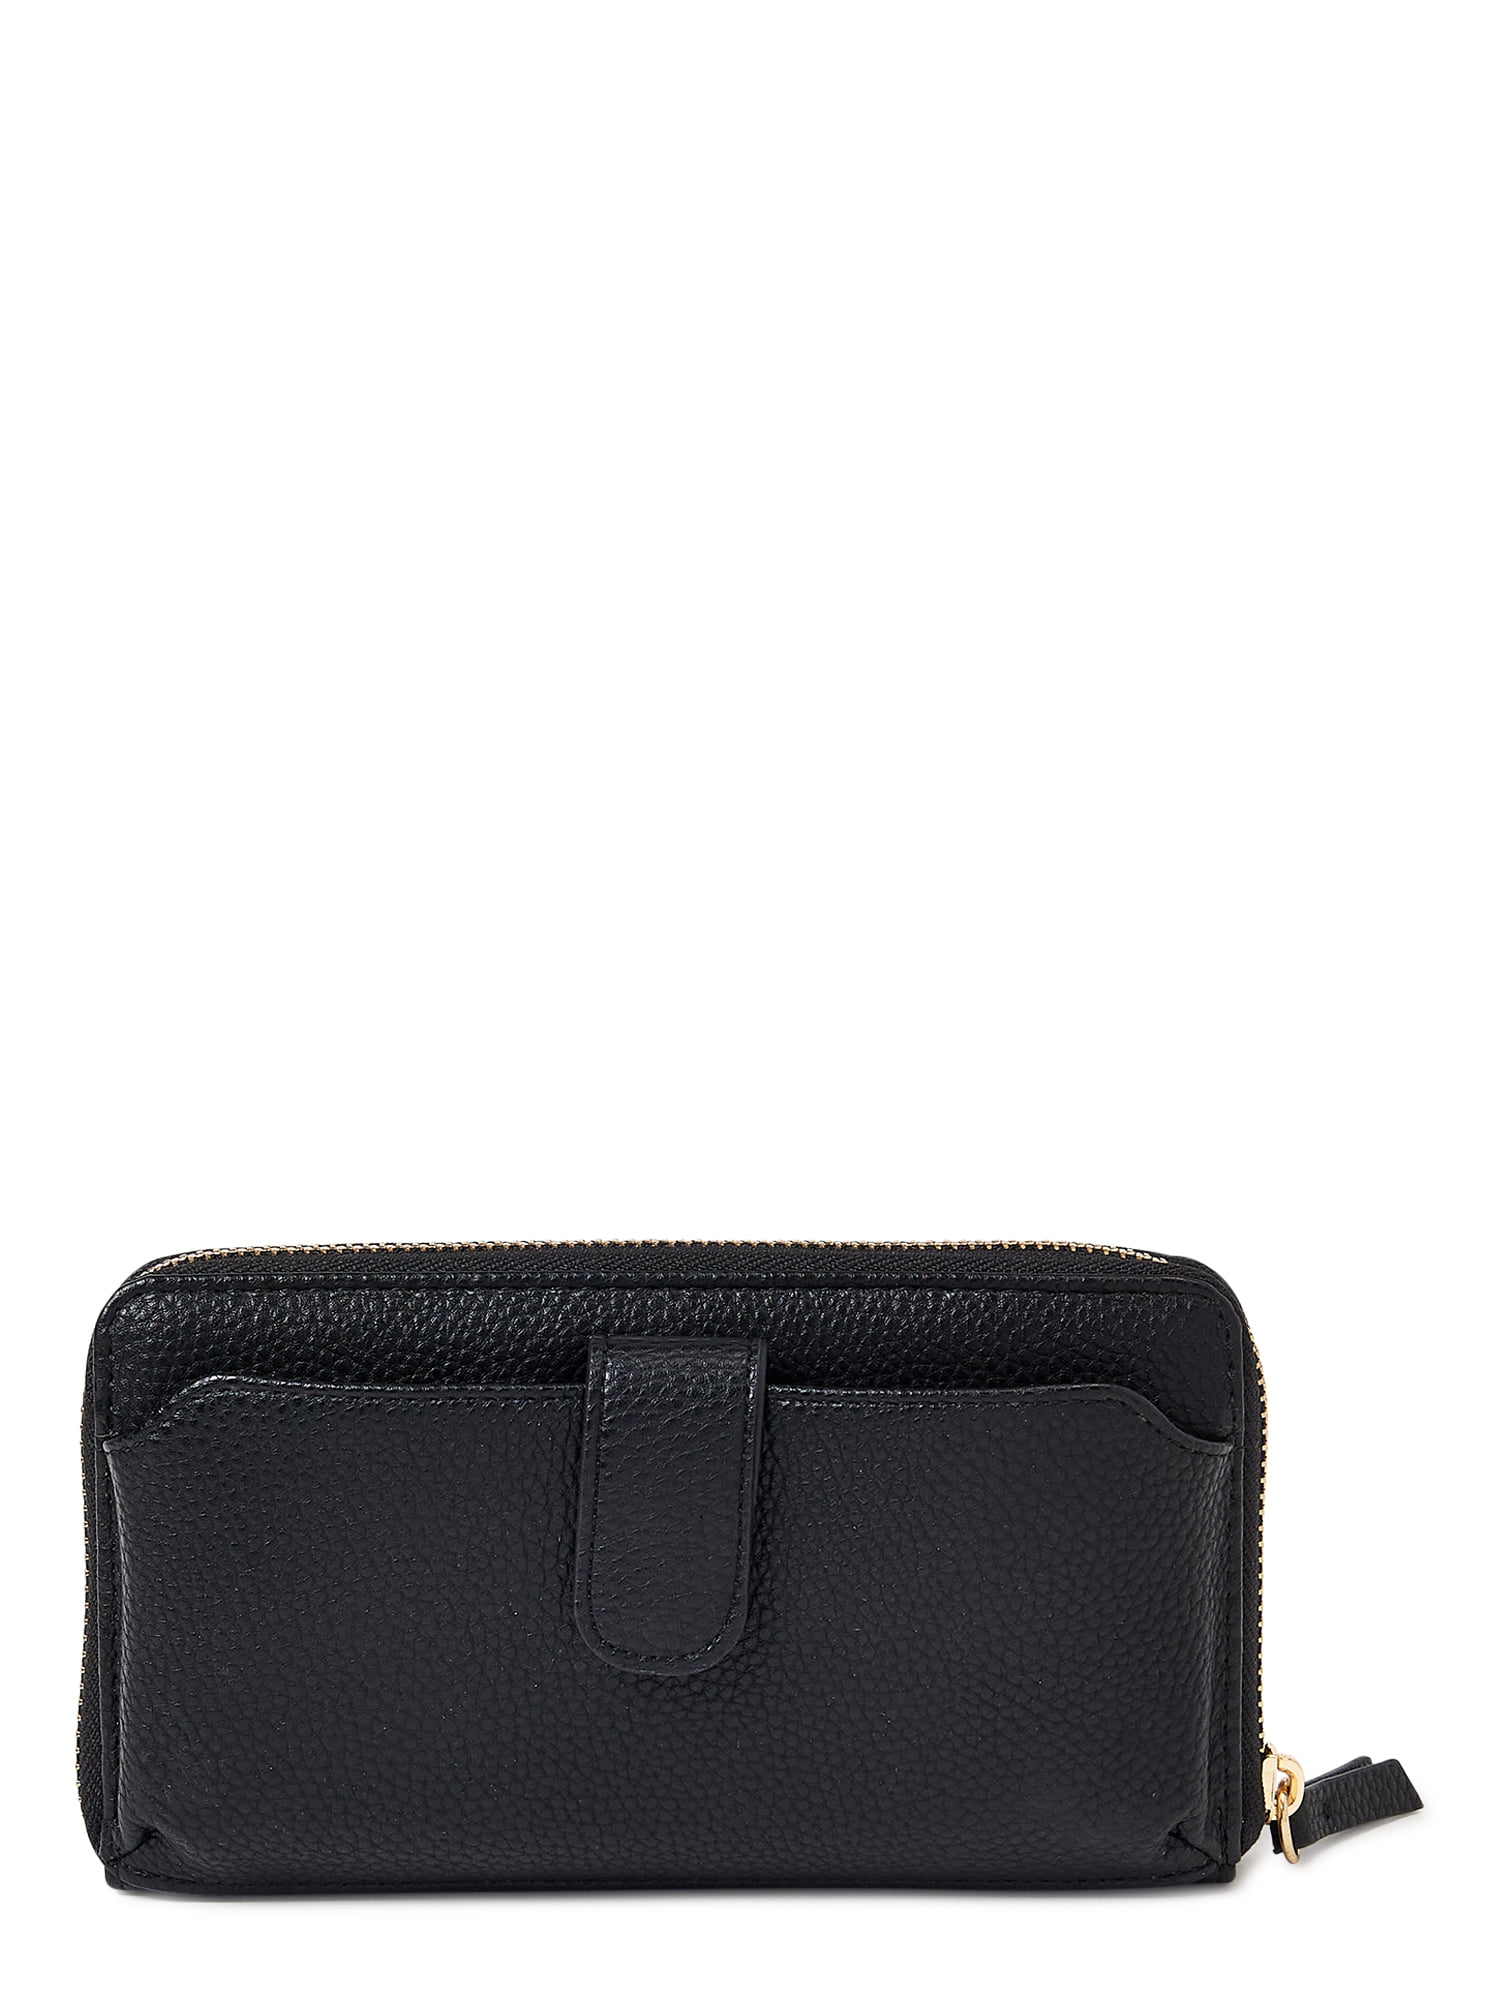 M60017 Fashion Women Wallet Black Empreinte Clutch Lady Ladies